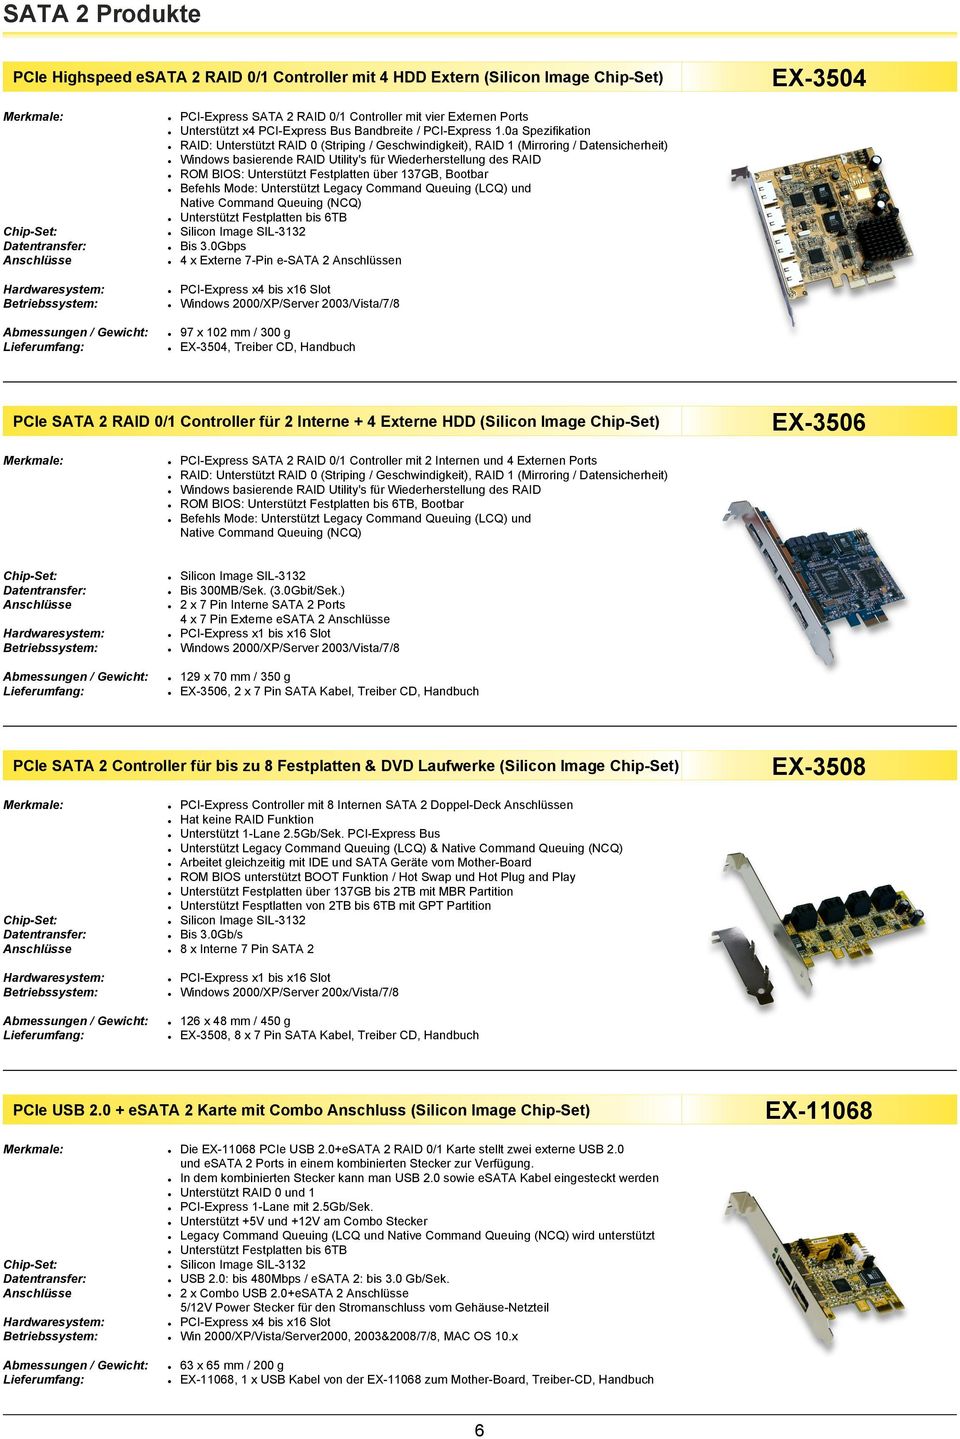 0Gbps 4 x Externe 7-Pin e-sata 2 n PCI-Express x4 bis x16 Slot 97 x 102 mm / 300 g EX-3504, Treiber CD, Handbuch PCIe SATA 2 RAID 0/1 Controller für 2 Interne + 4 Externe HDD (Silicon Image Chip-Set)